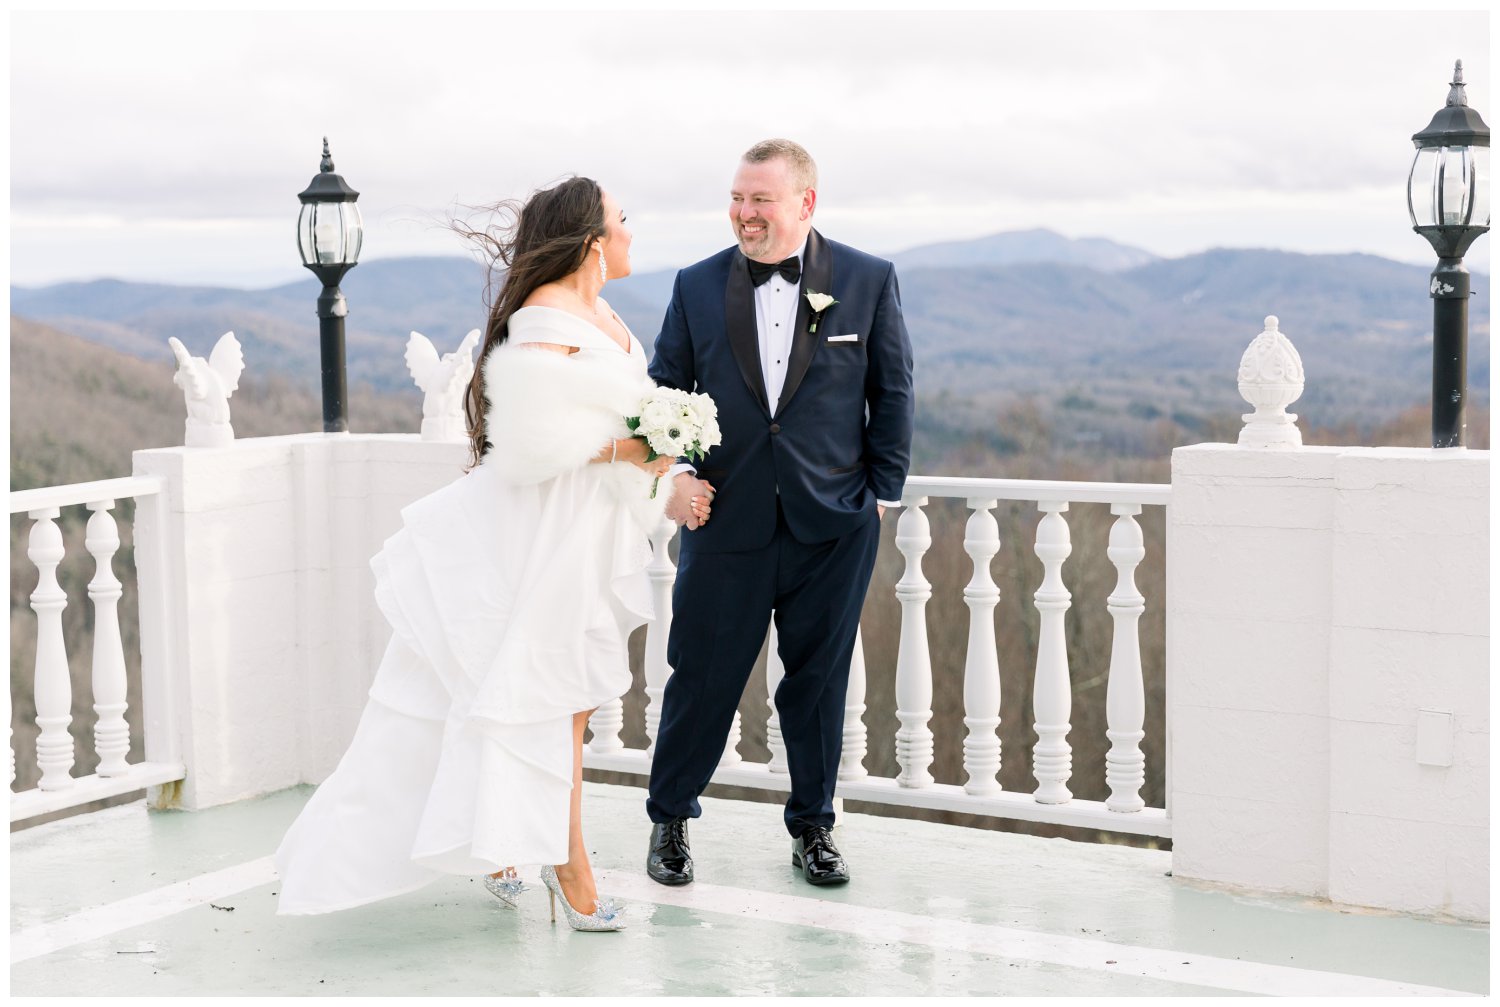 Romantic mountaintop wedding portraits in Asheville North Carolina by top wedding photographer Samantha Laffoon